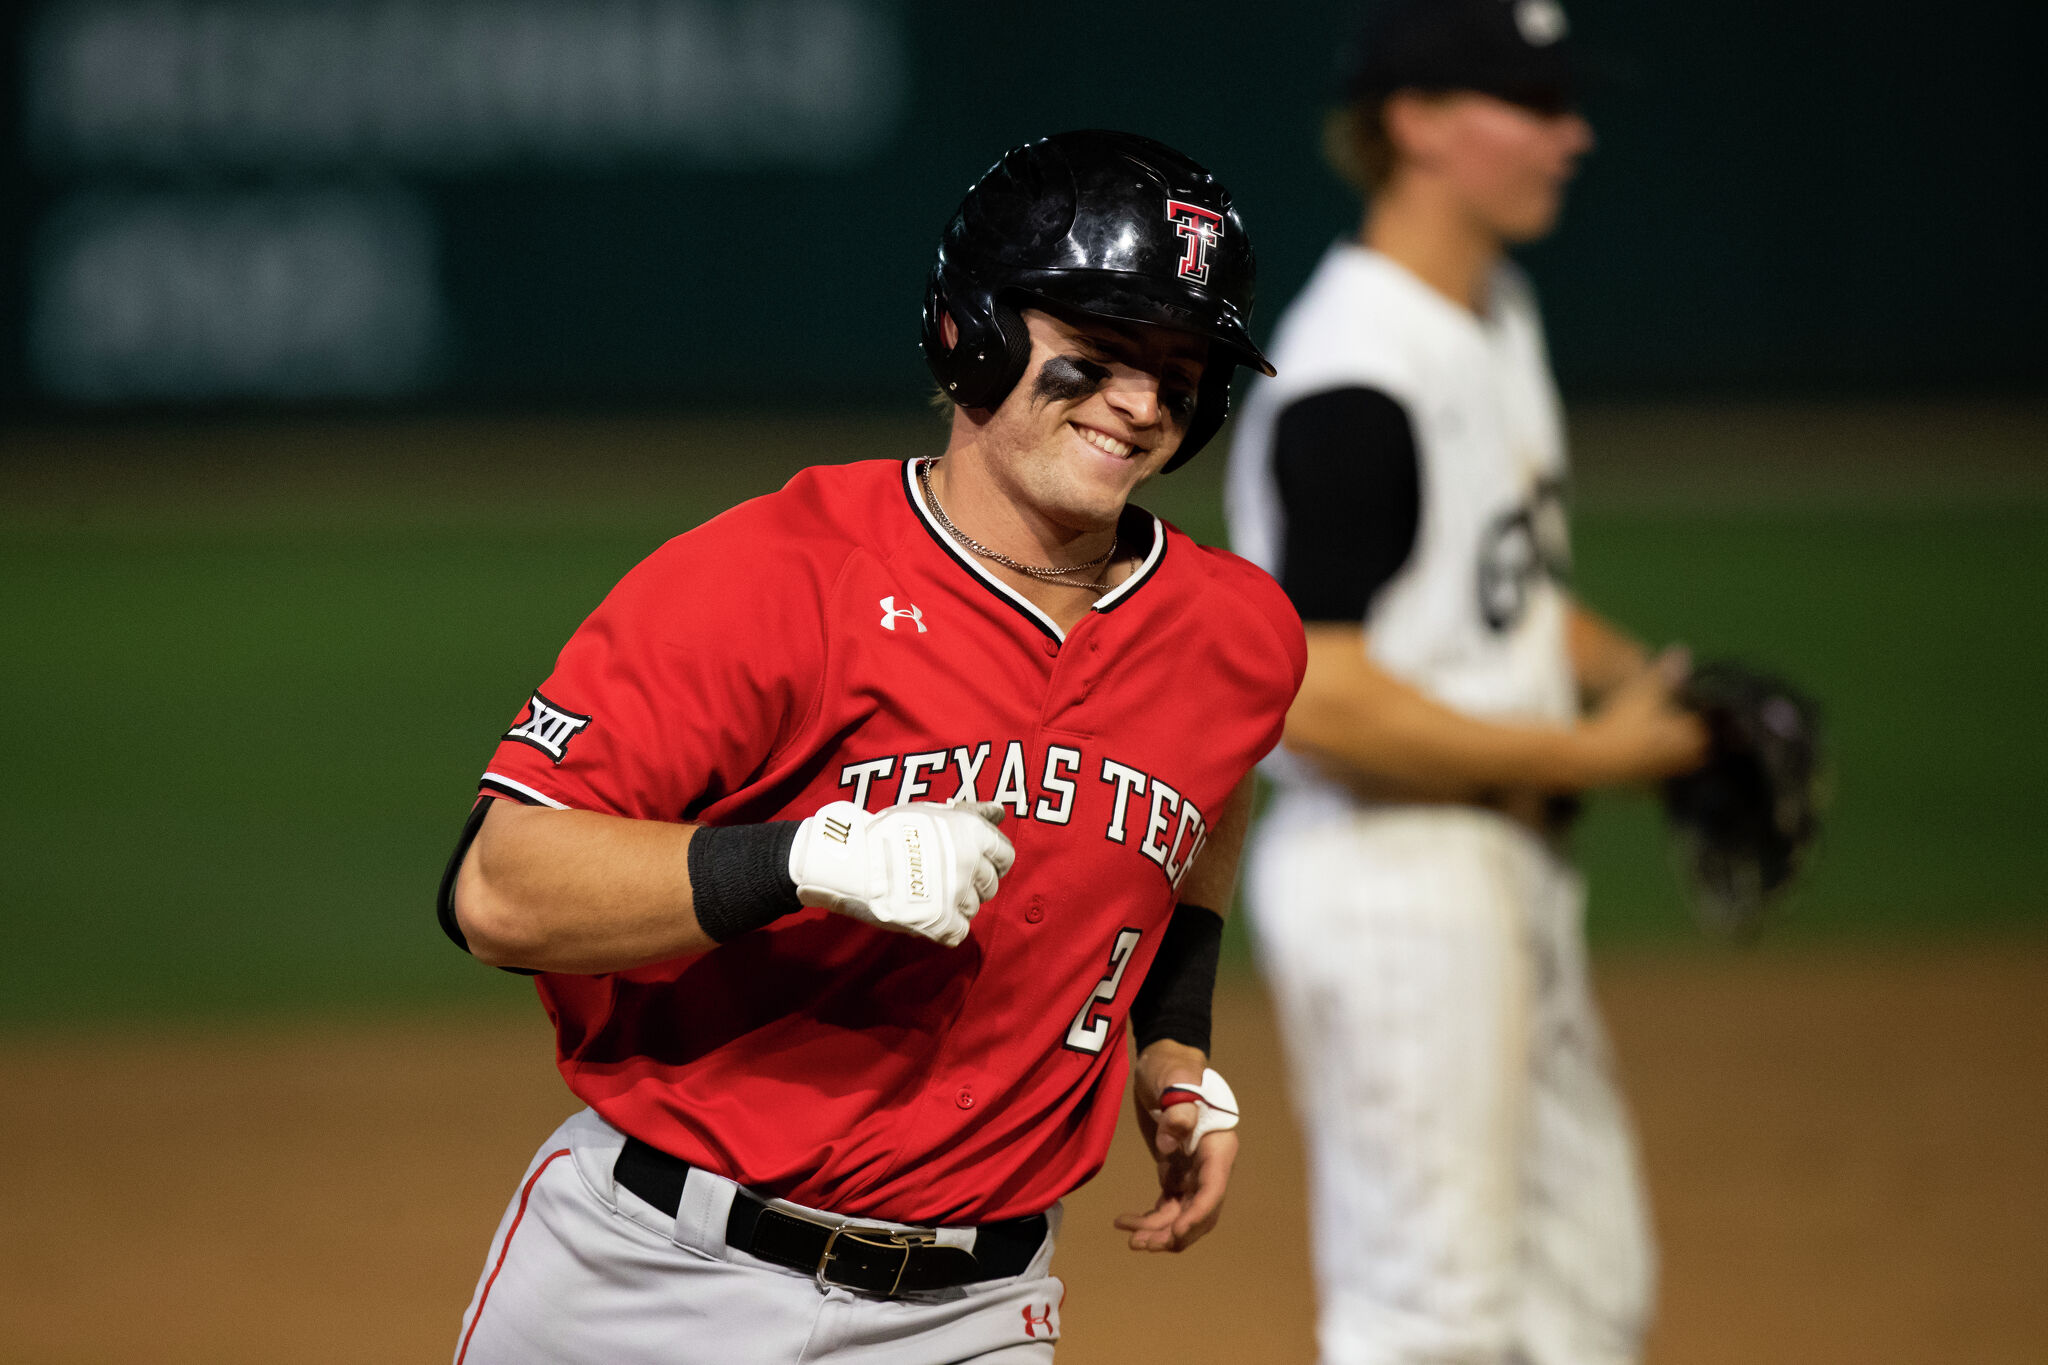 Murphy Stehly - Baseball - University of Texas Athletics